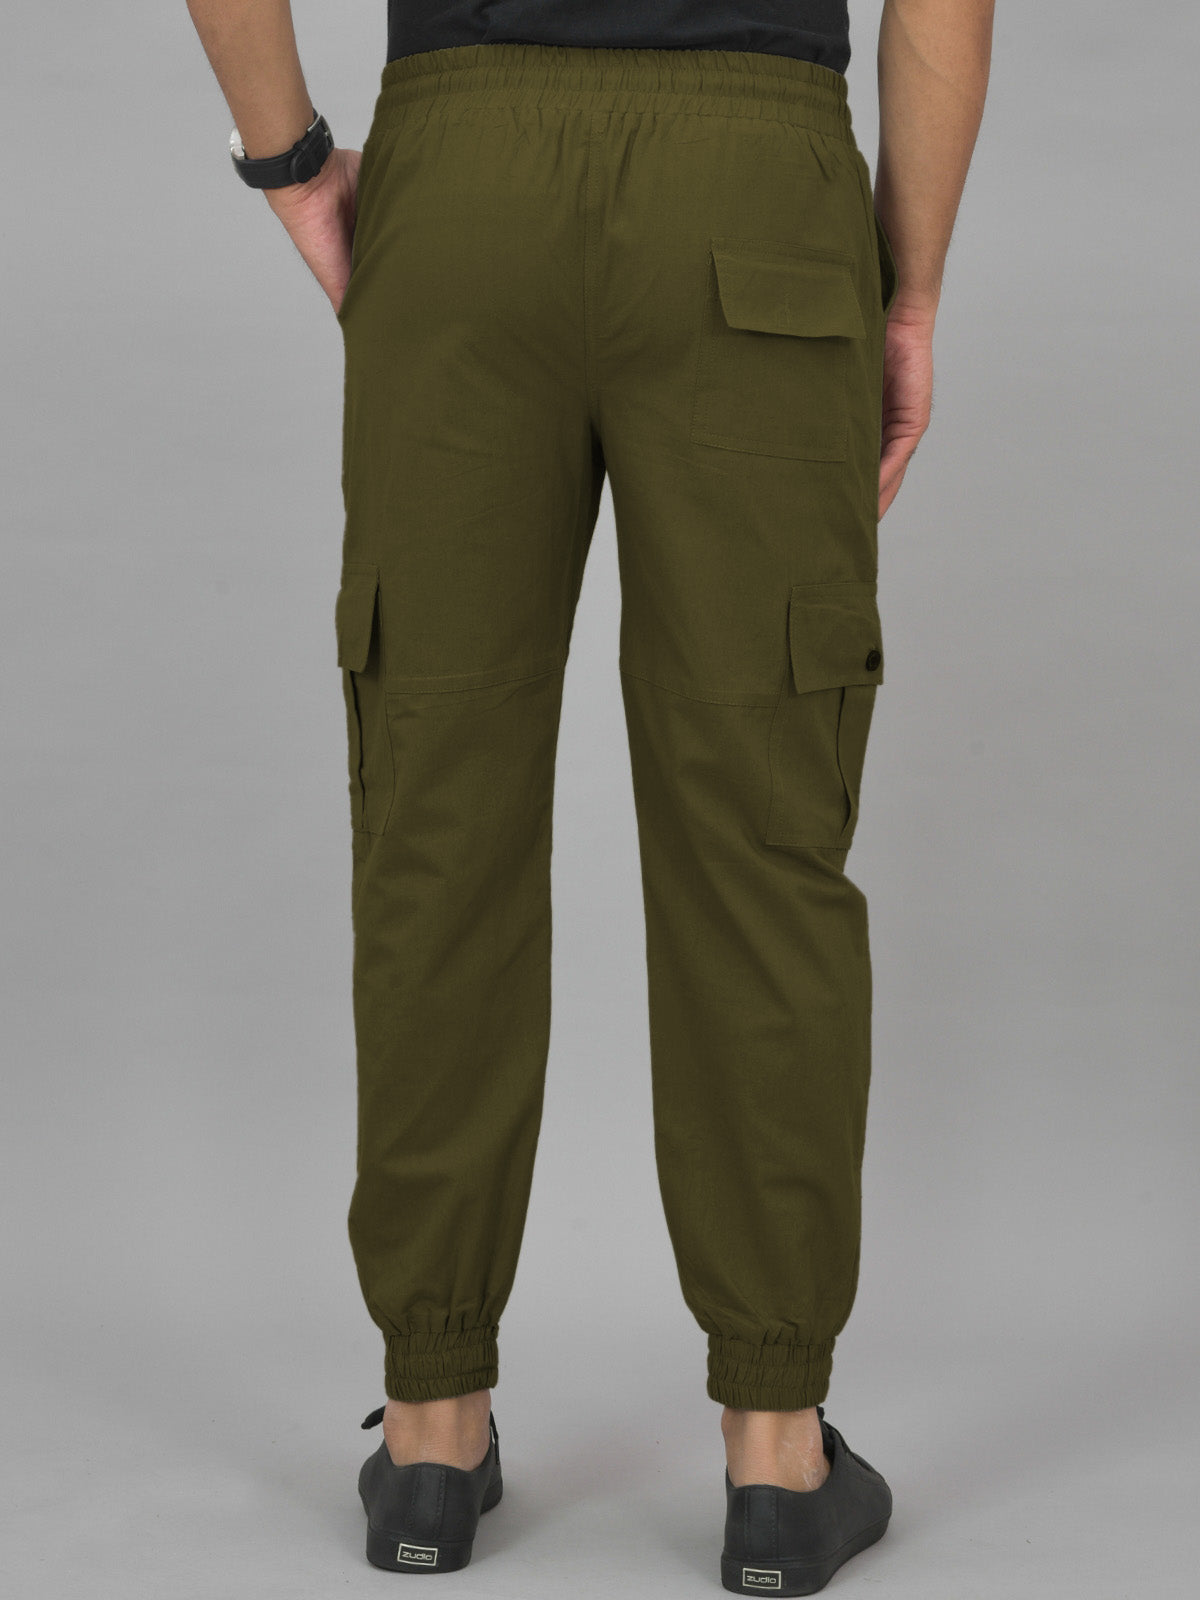 Combo Pack Of Mens Melange Grey And Mehndi Green Five Pocket Cotton Cargo Pants